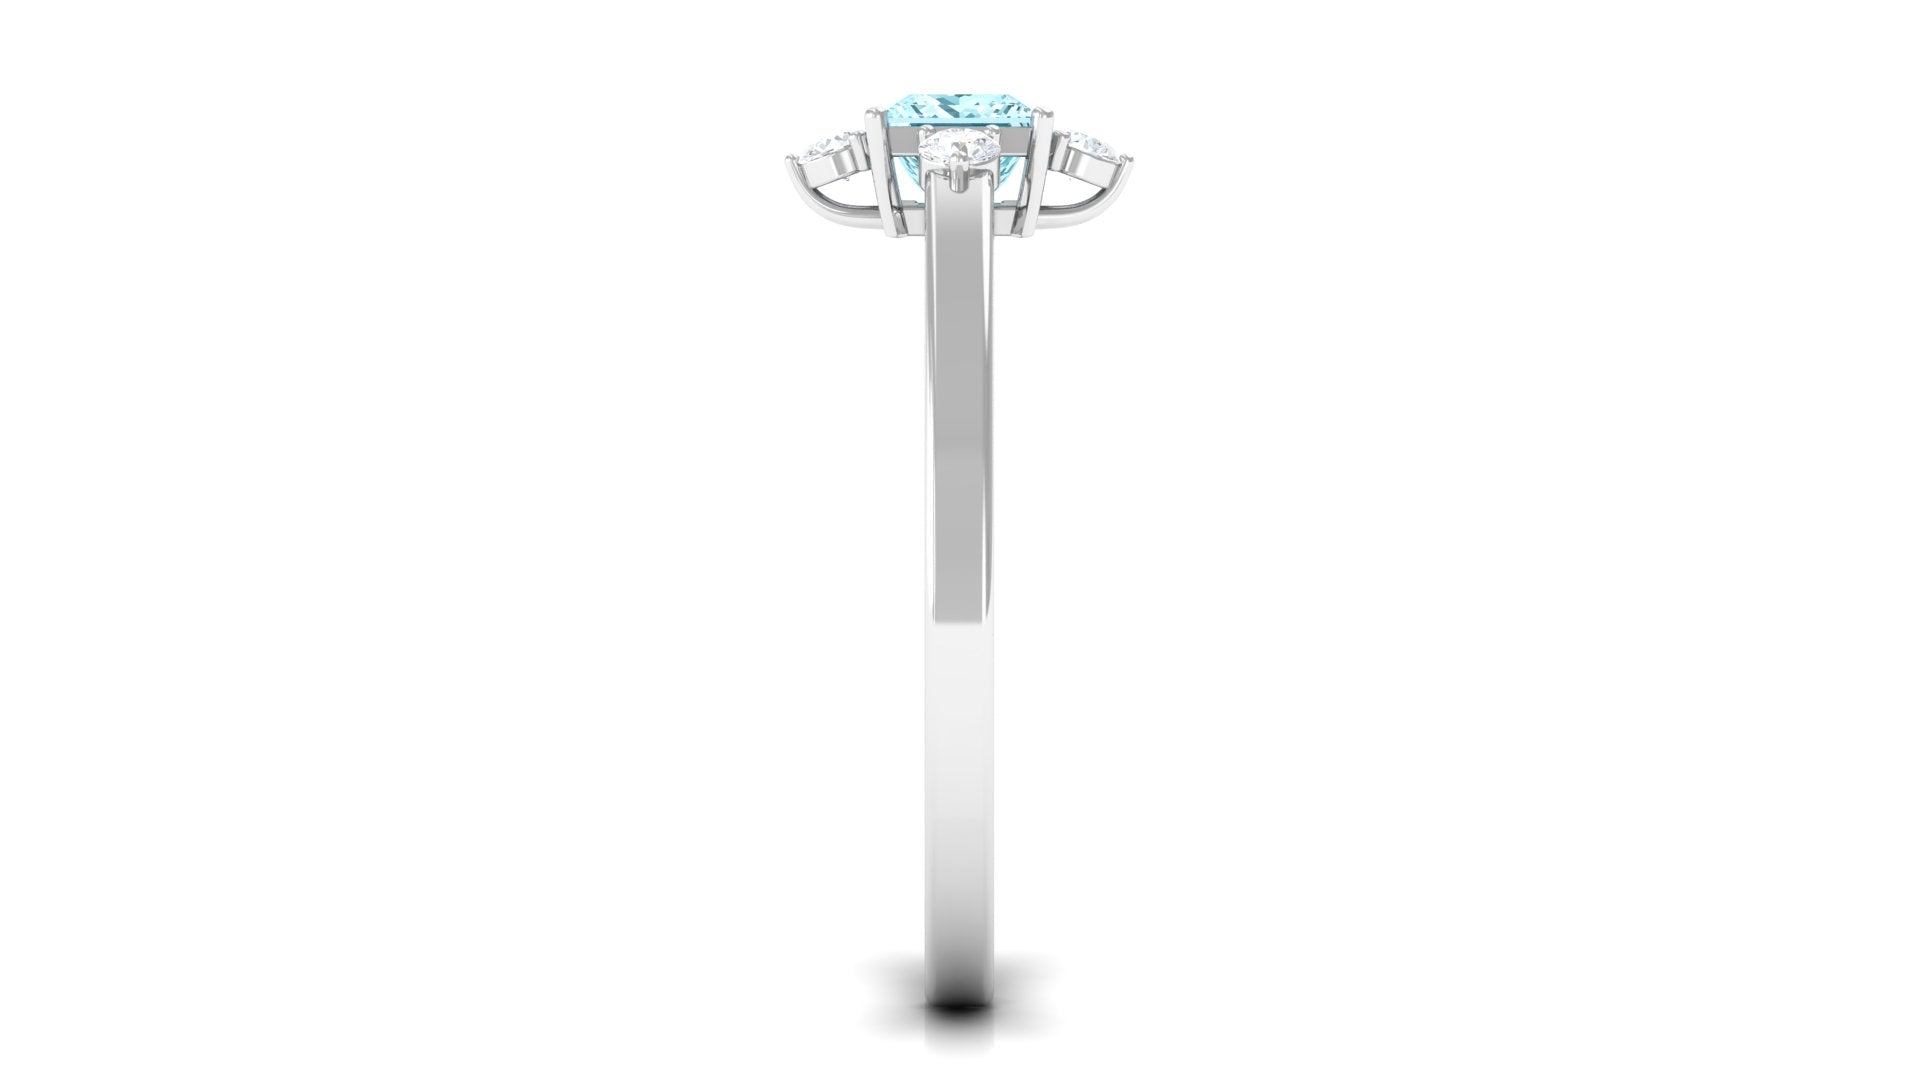 Princess Aquamarine Solitaire Promise Ring with Diamond Aquamarine - ( AAA ) - Quality - Rosec Jewels